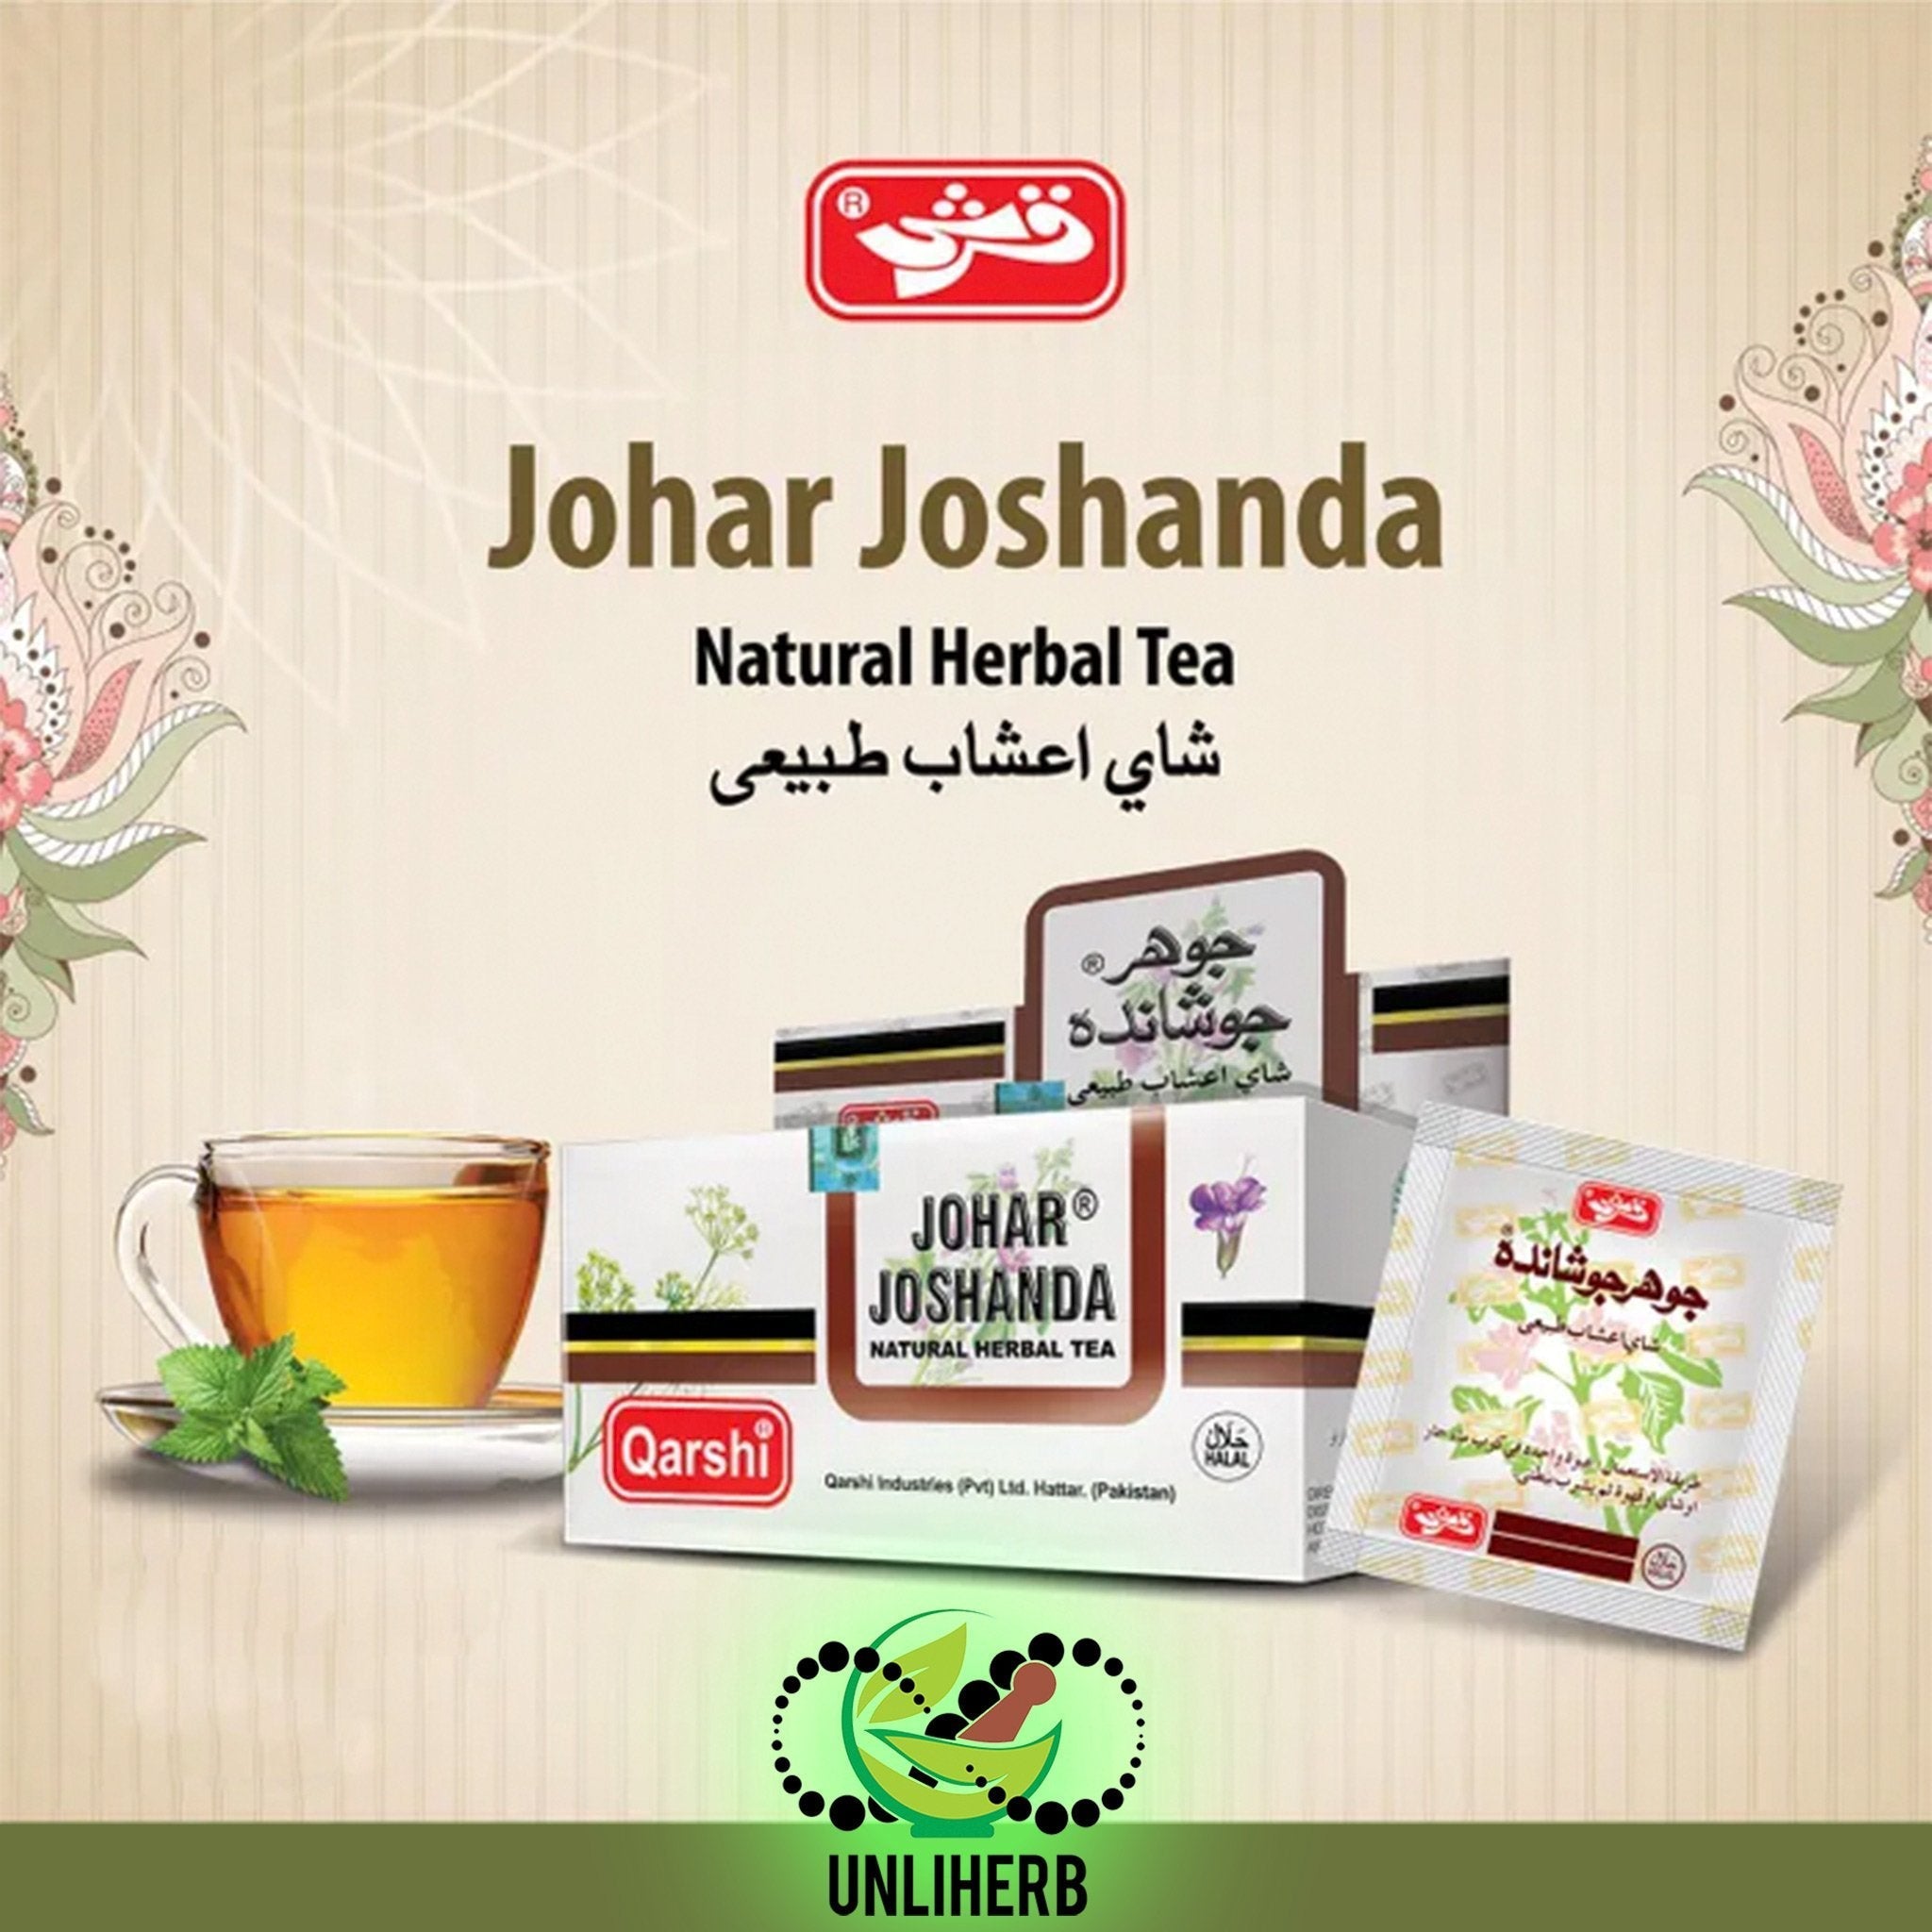 Qarshi Johar Joshanda Natural Herbal Tea 1 box 30sachets